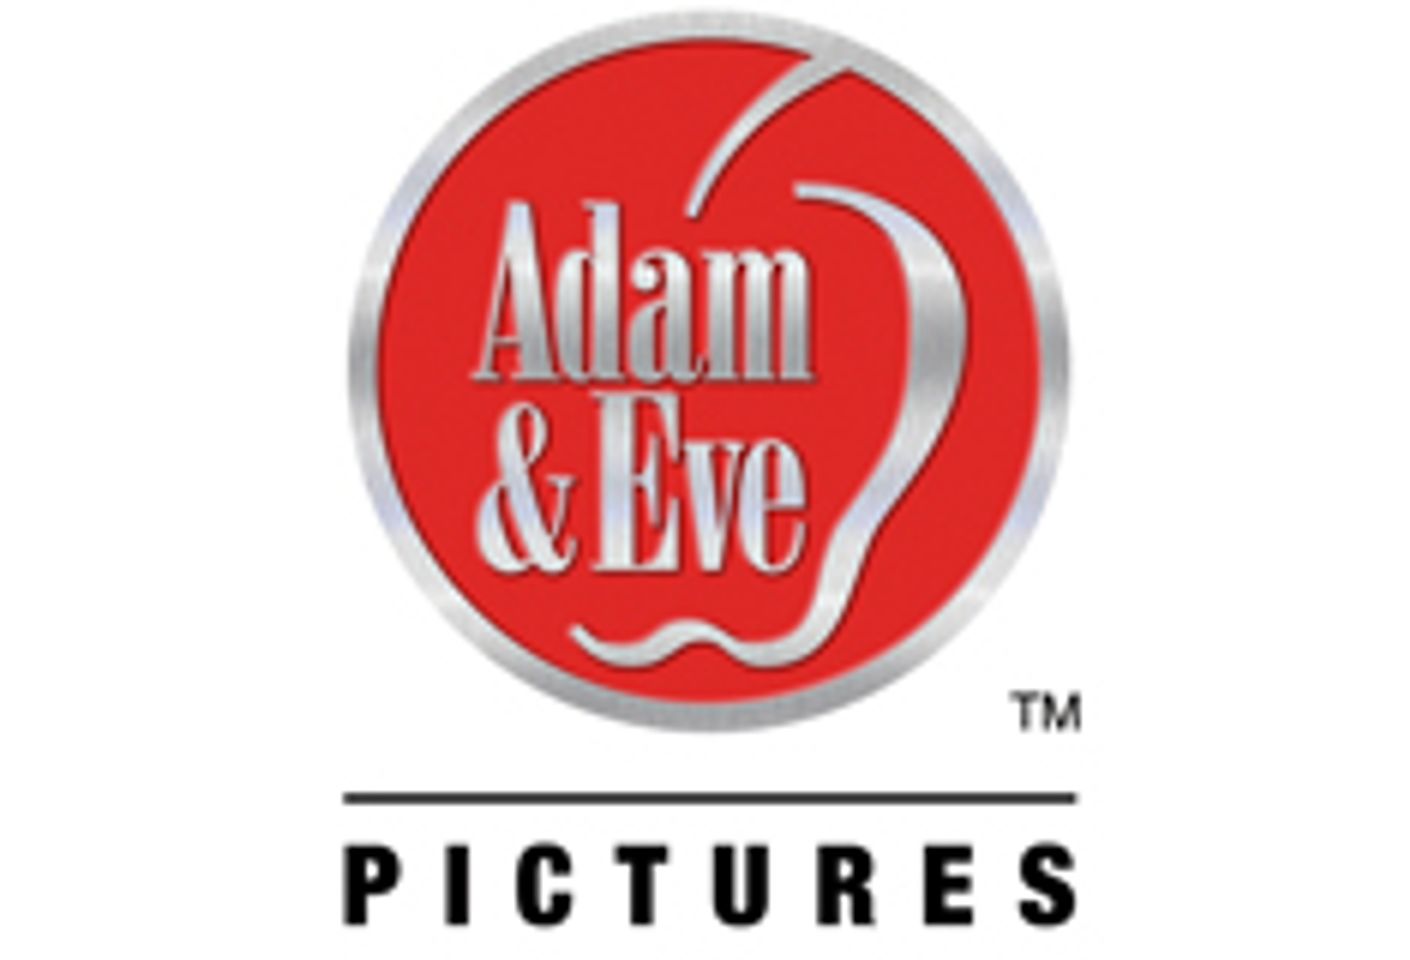 Adam & Eve Contract Star Teagan Presley to Sign at Exxxotica